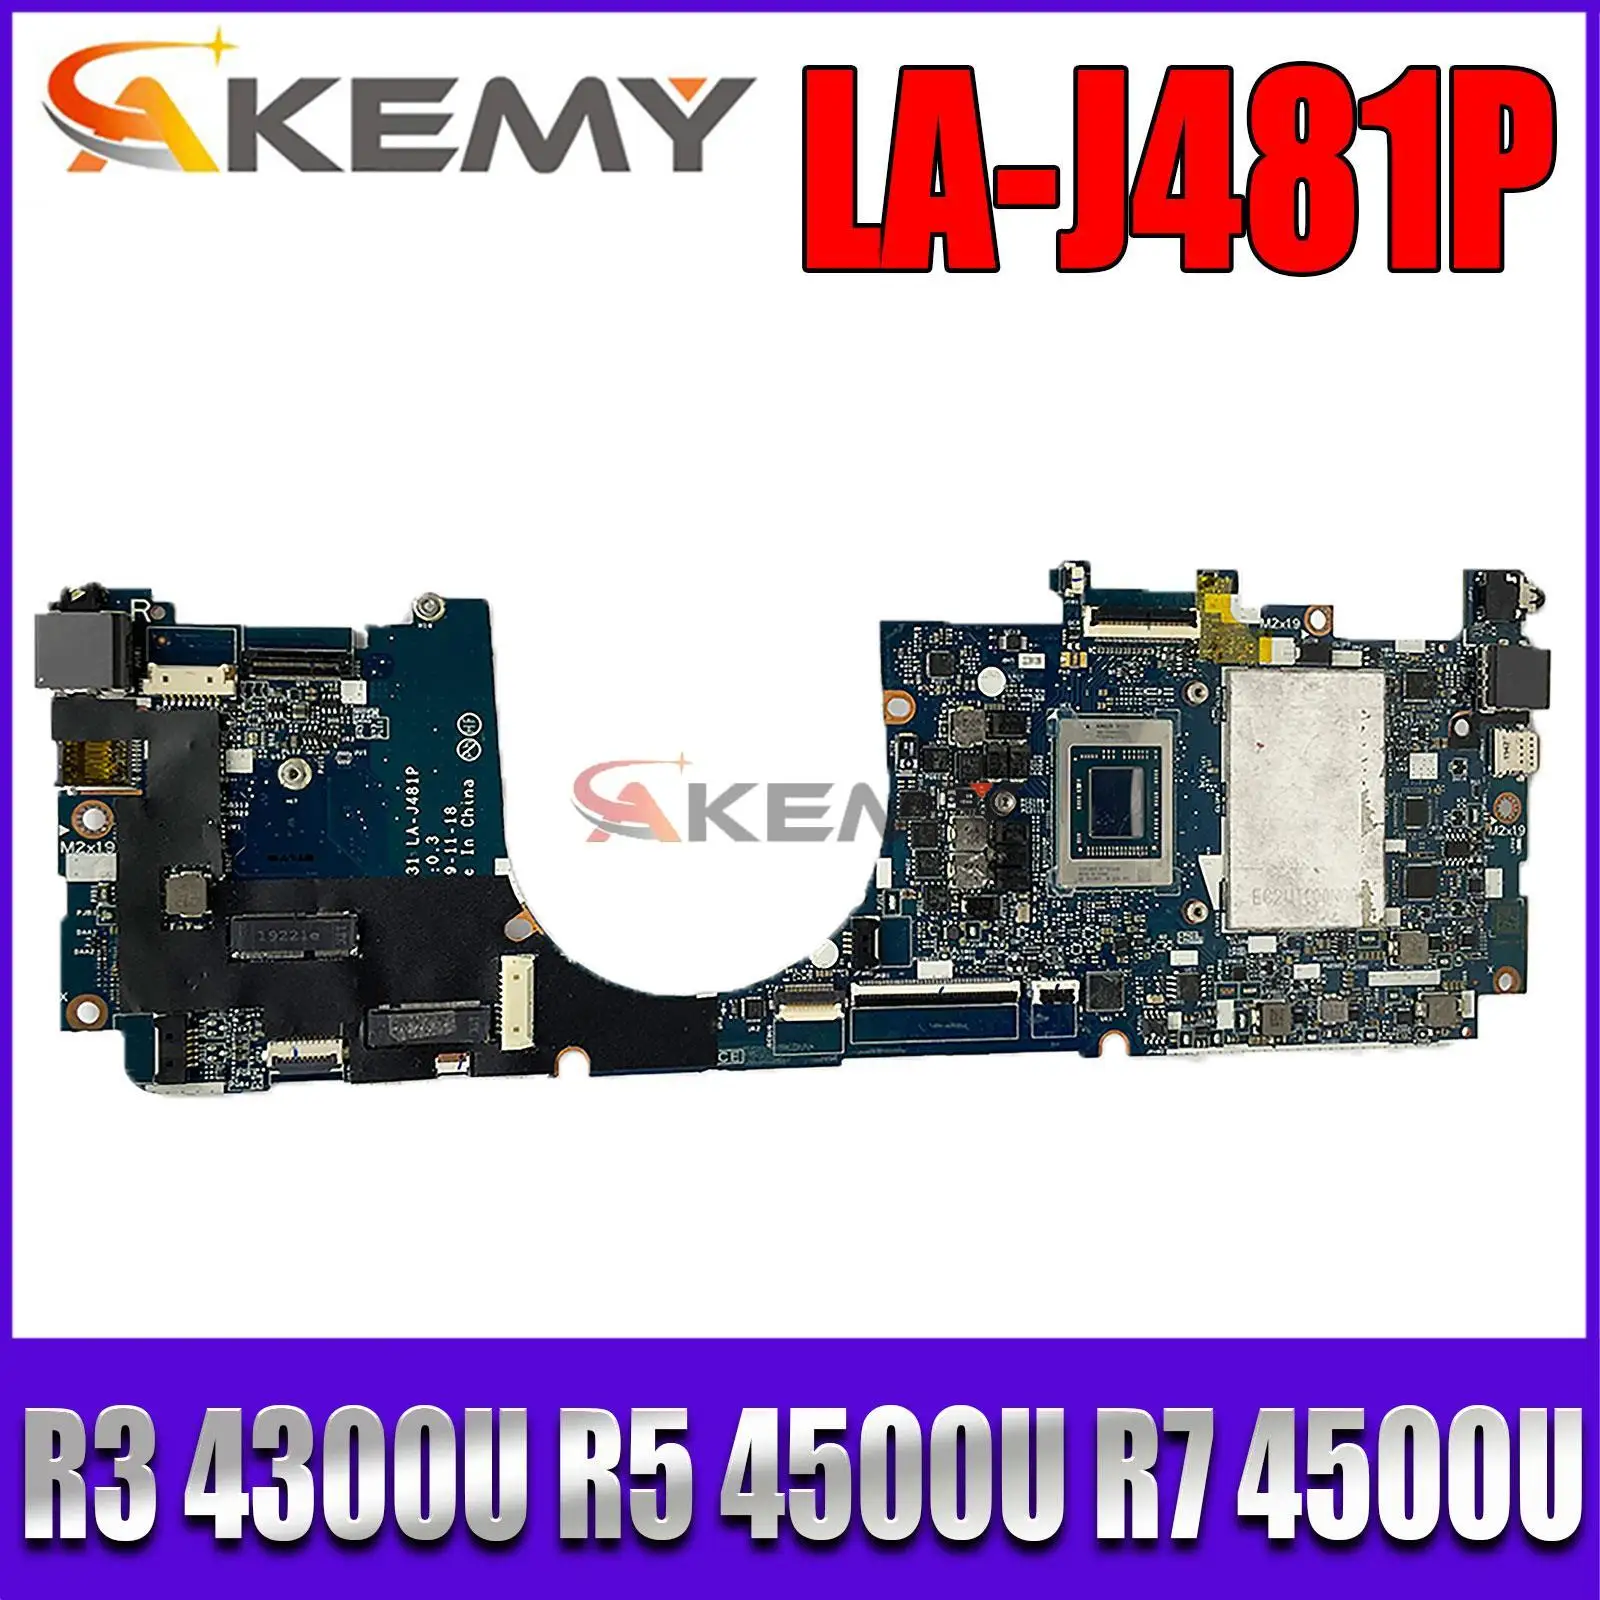 

For HP ENVY X360 13-AY 13-ay0510au Laptop Motherboard R3-4300U R5-4500U R7-4500U GPR31 LA-J481P Working Function